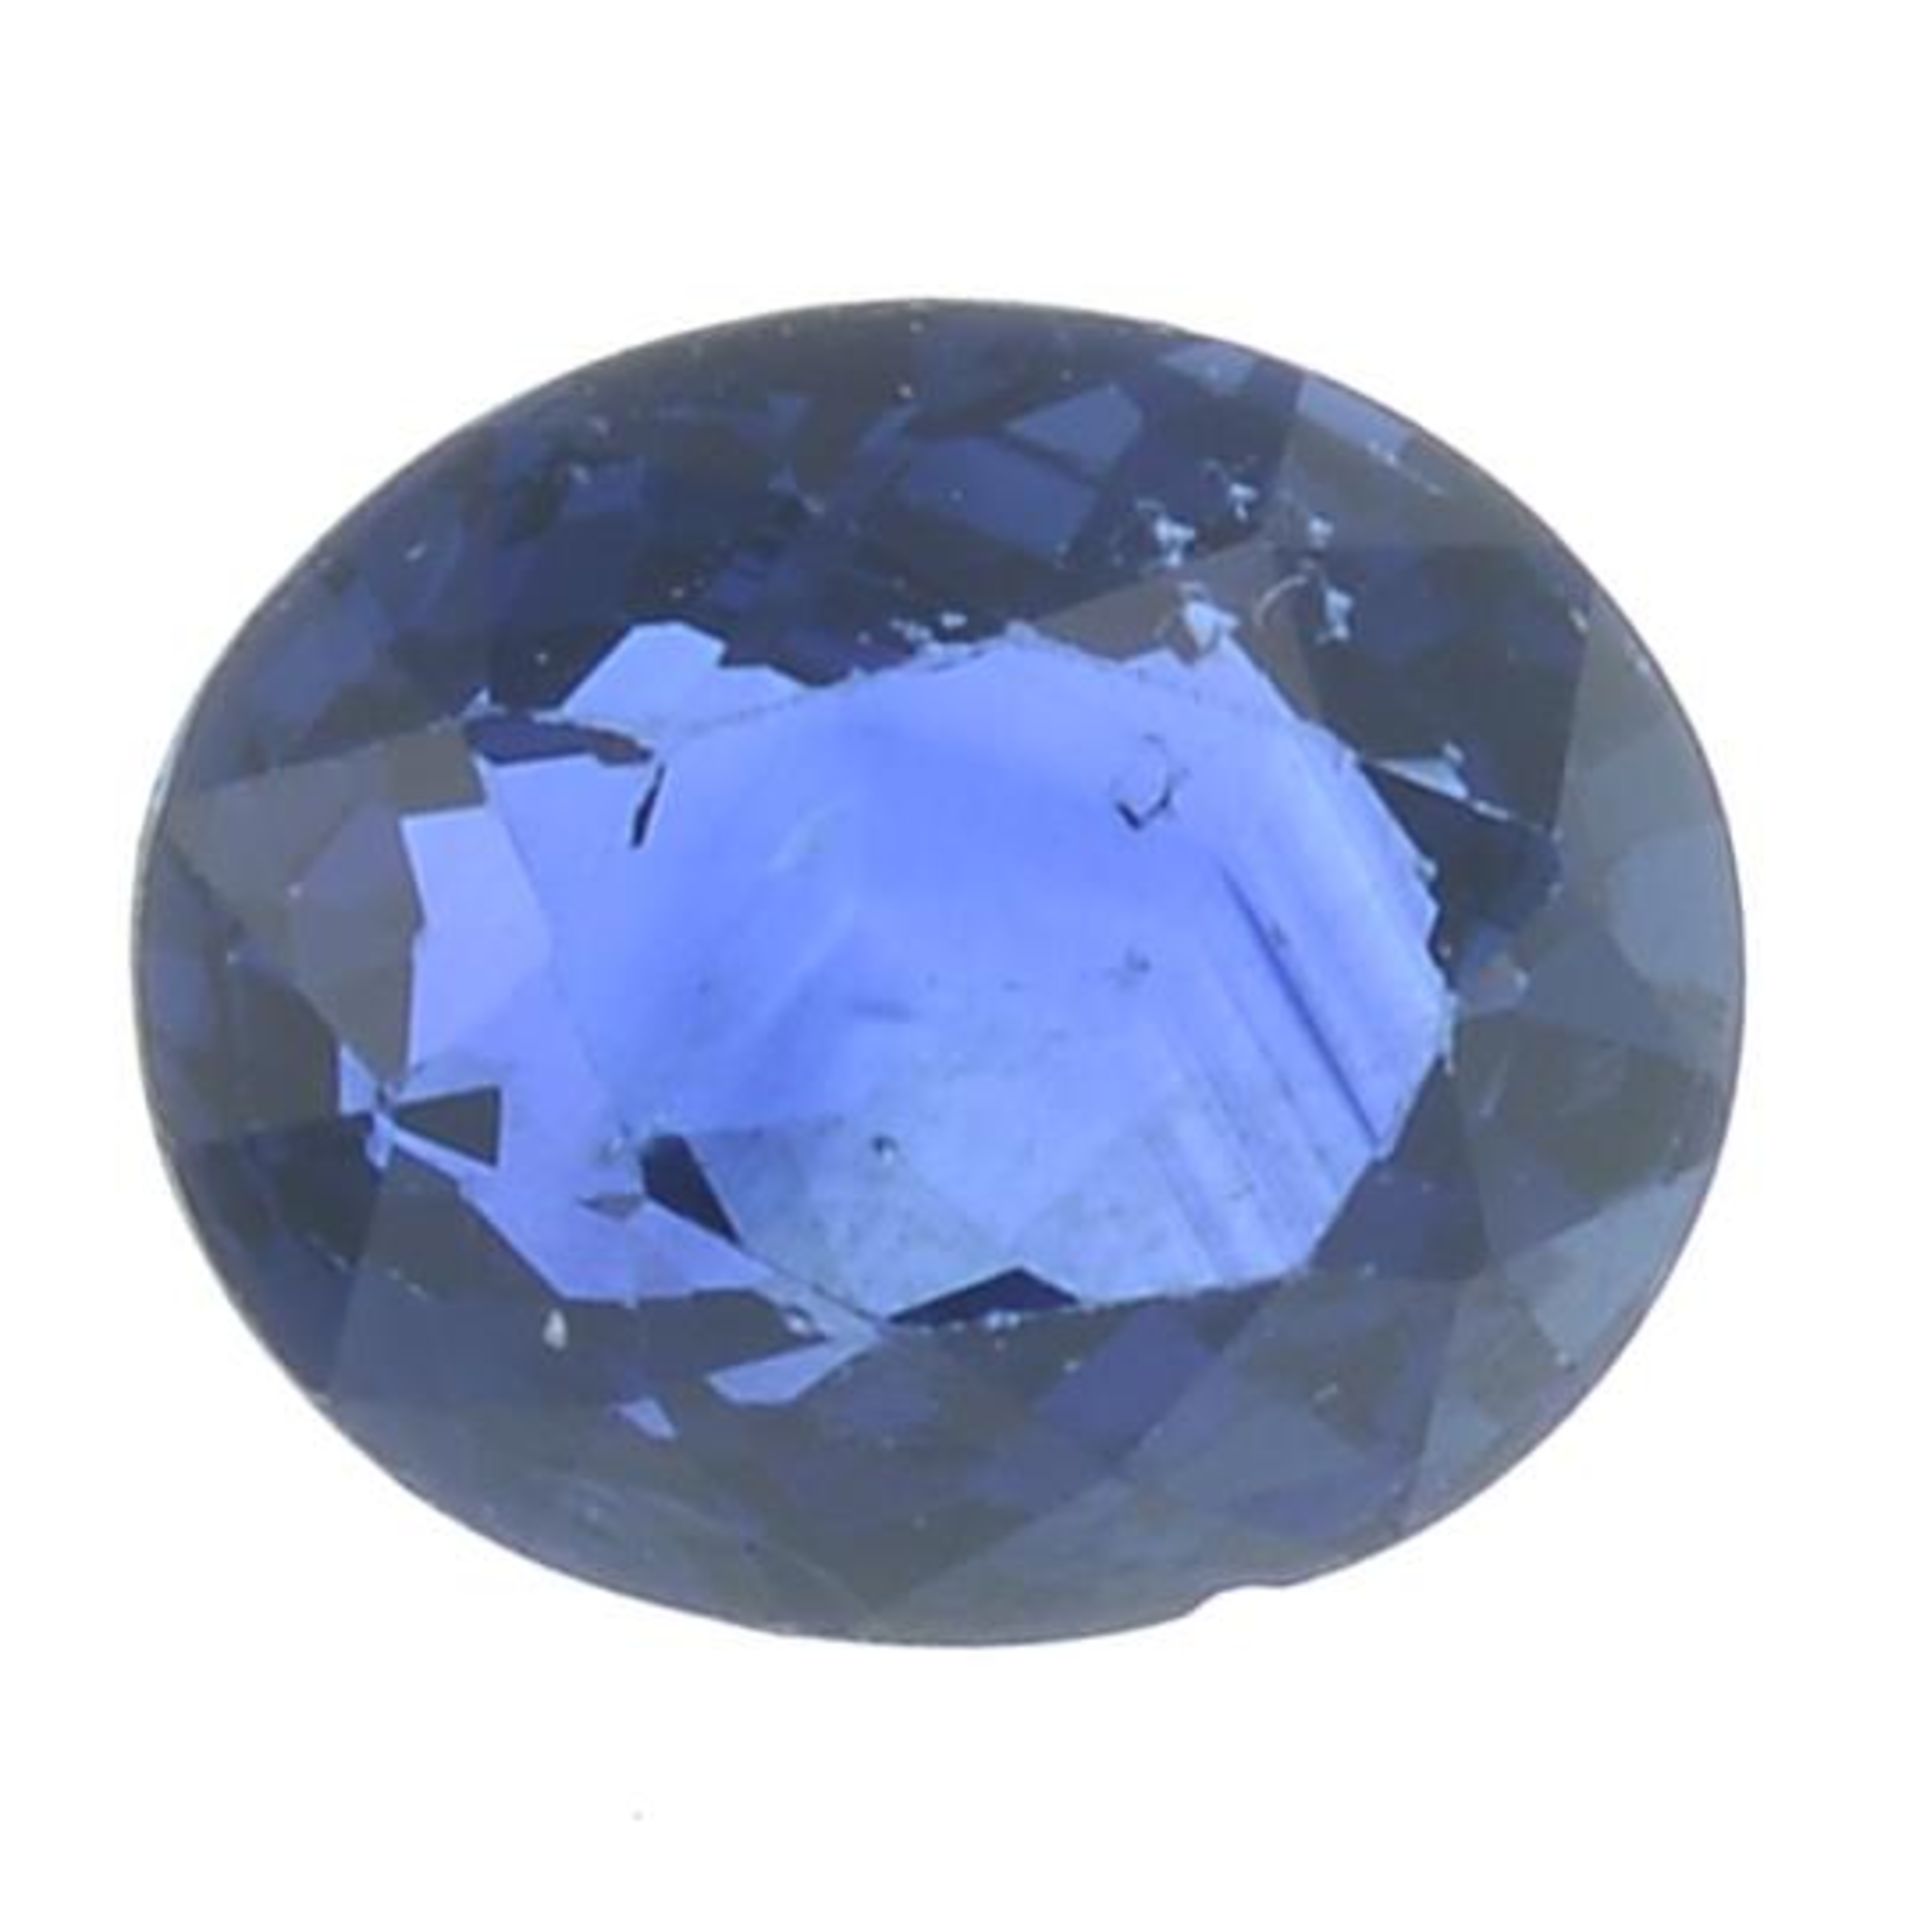 An oval-shape East African sapphire.